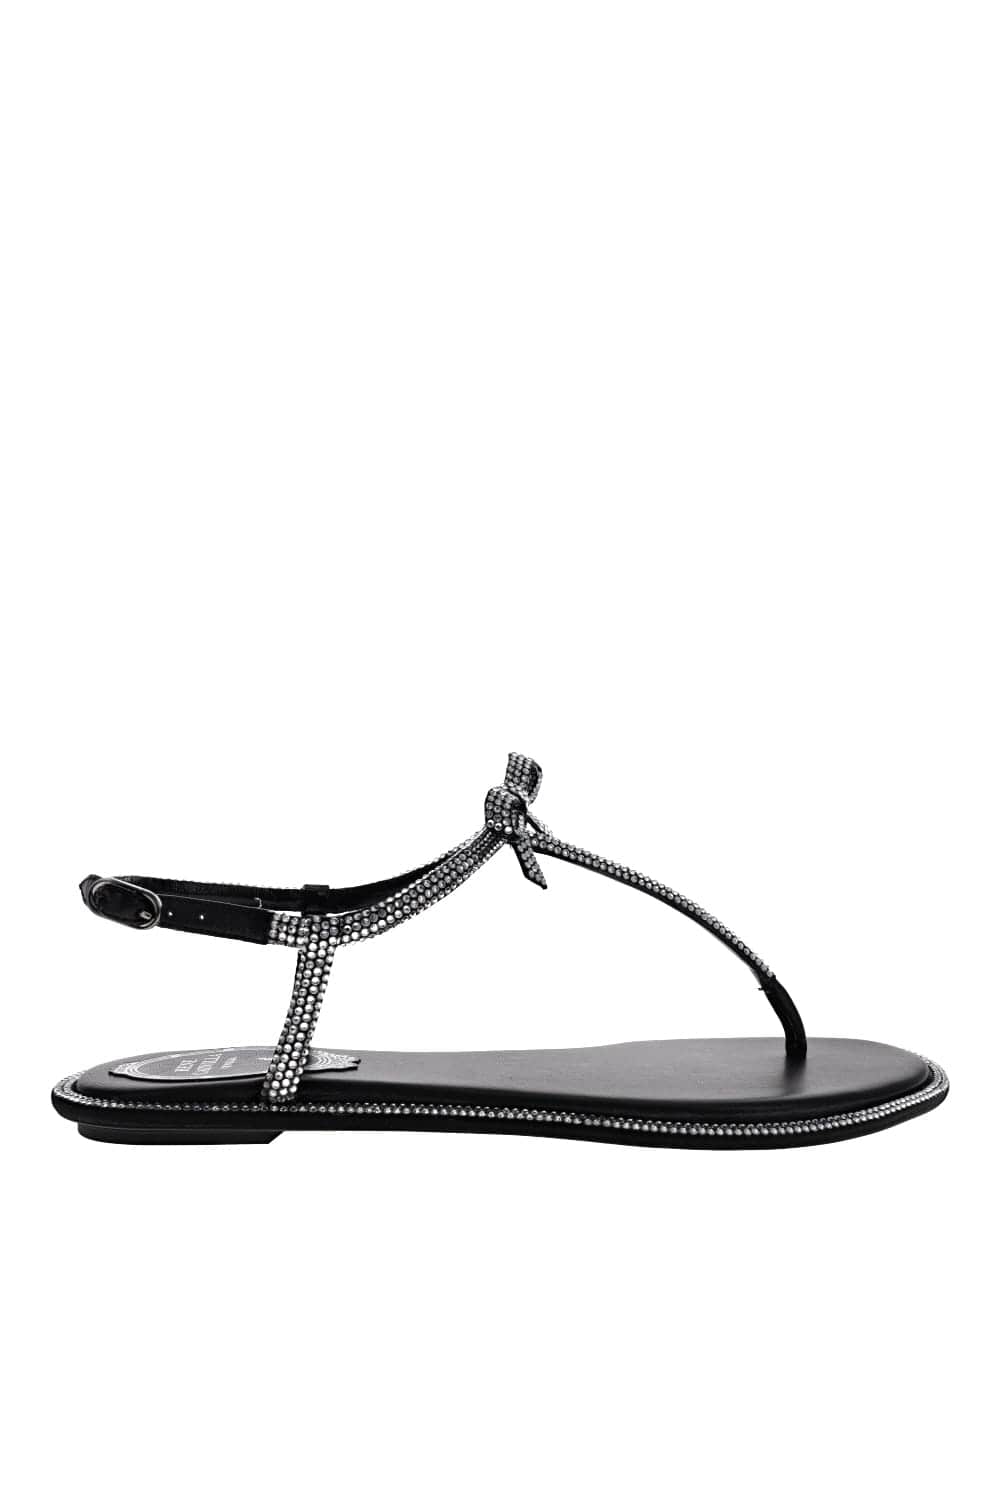 RENE CAOVILLA Black Crystal Bow Flat Sandal